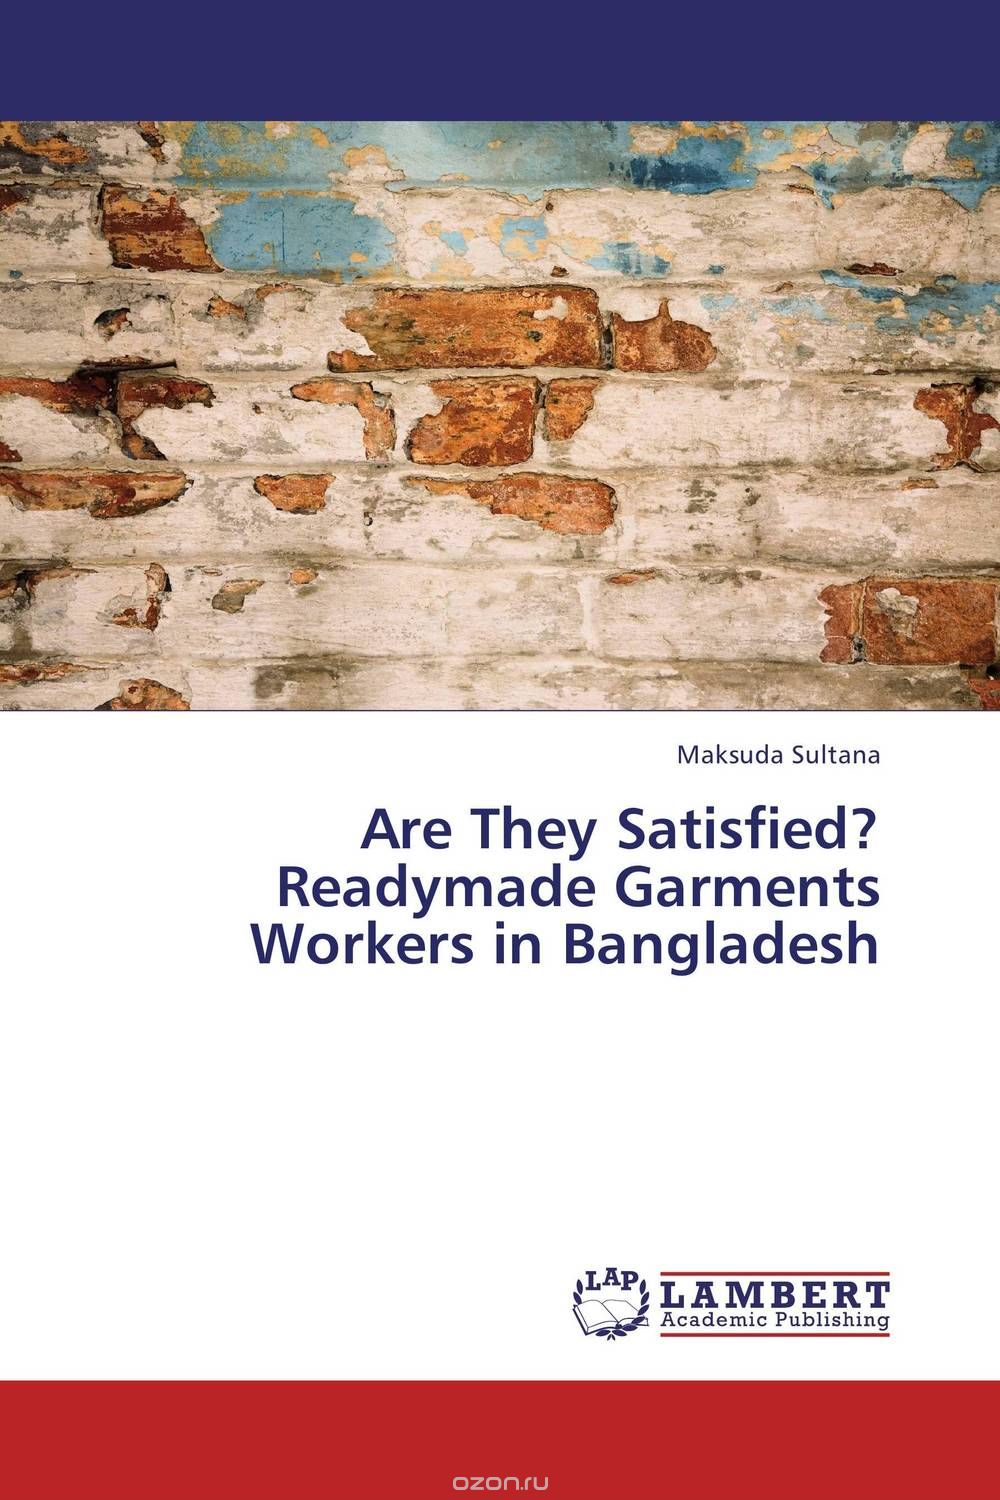 Скачать книгу "Are They Satisfied? Readymade Garments Workers in Bangladesh"